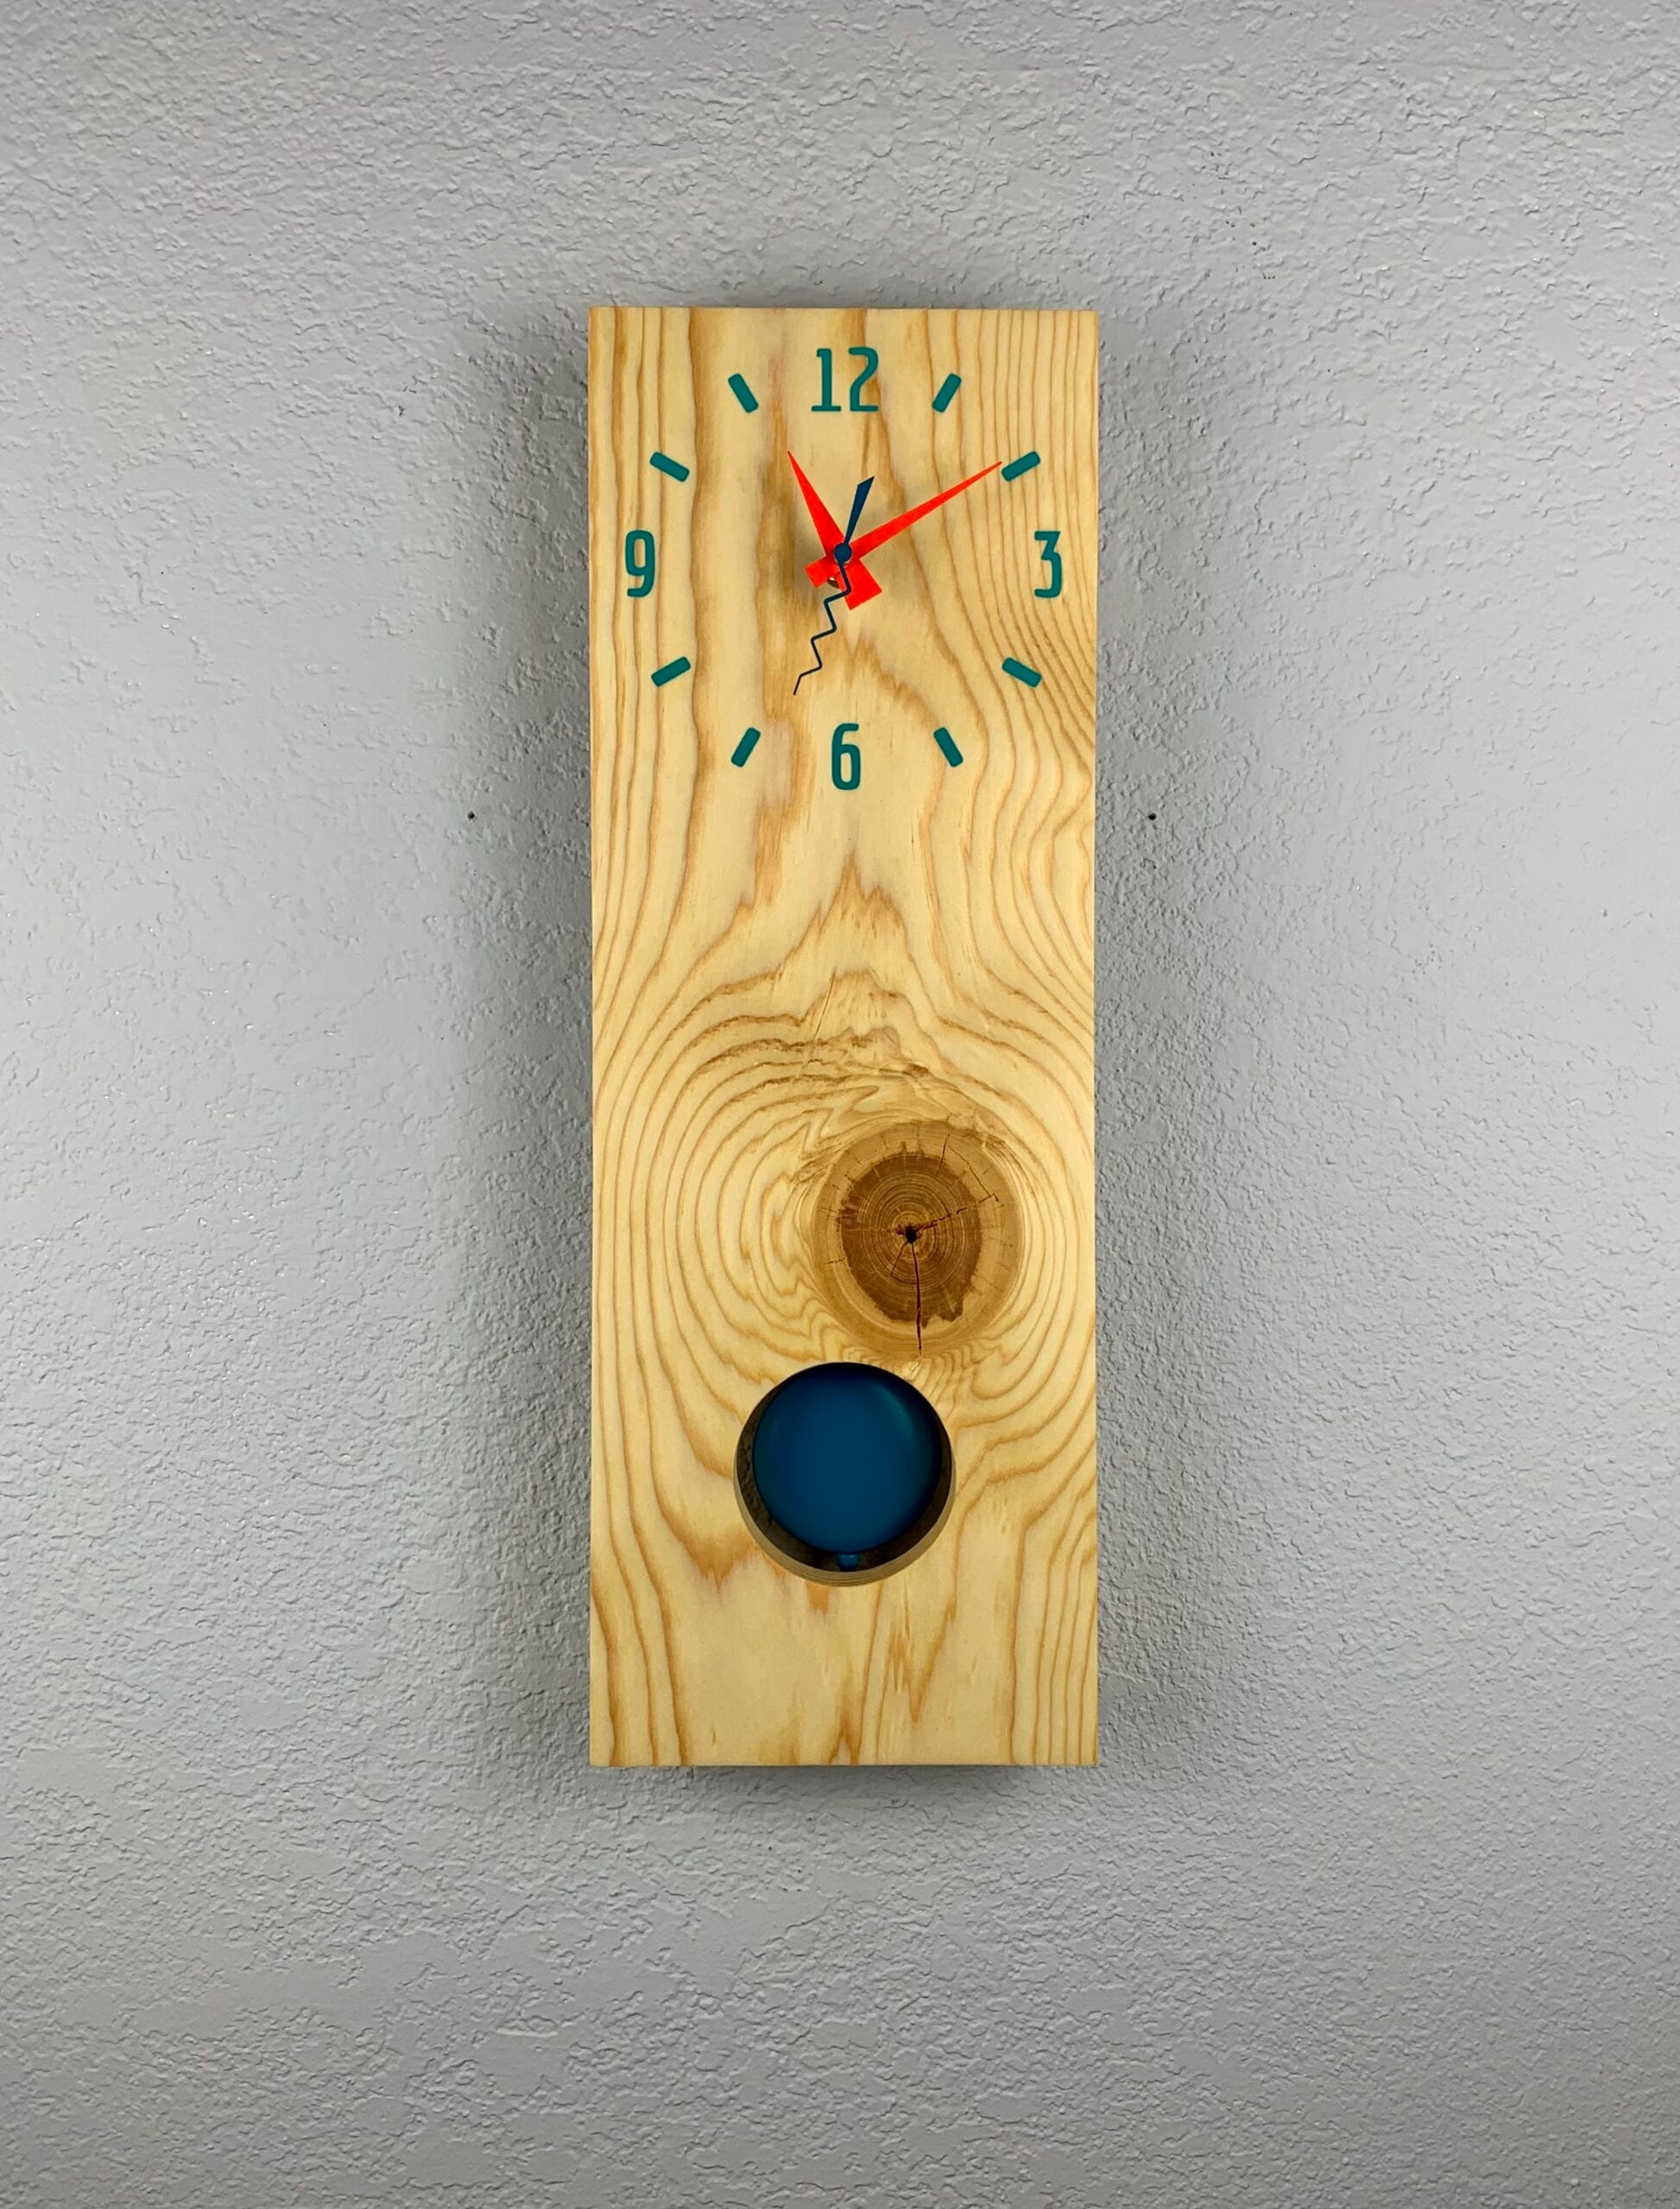 Pine Plank Pendulum Wall Clock in Santa Fe Style